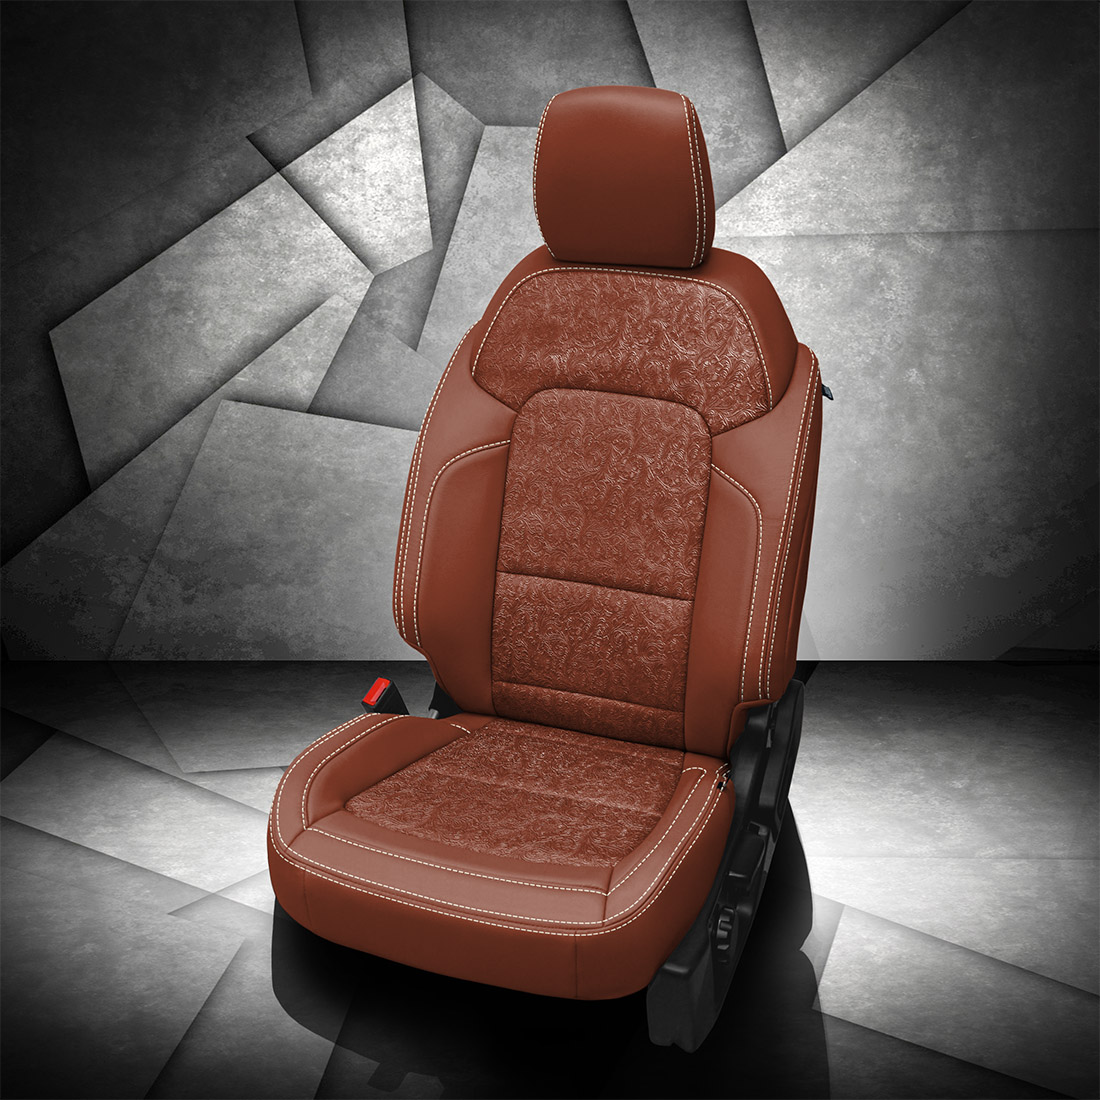 Ford Bronco Katzkin diamond stitch leather seats in Hauk Designs Bronco spicoli-awesome-